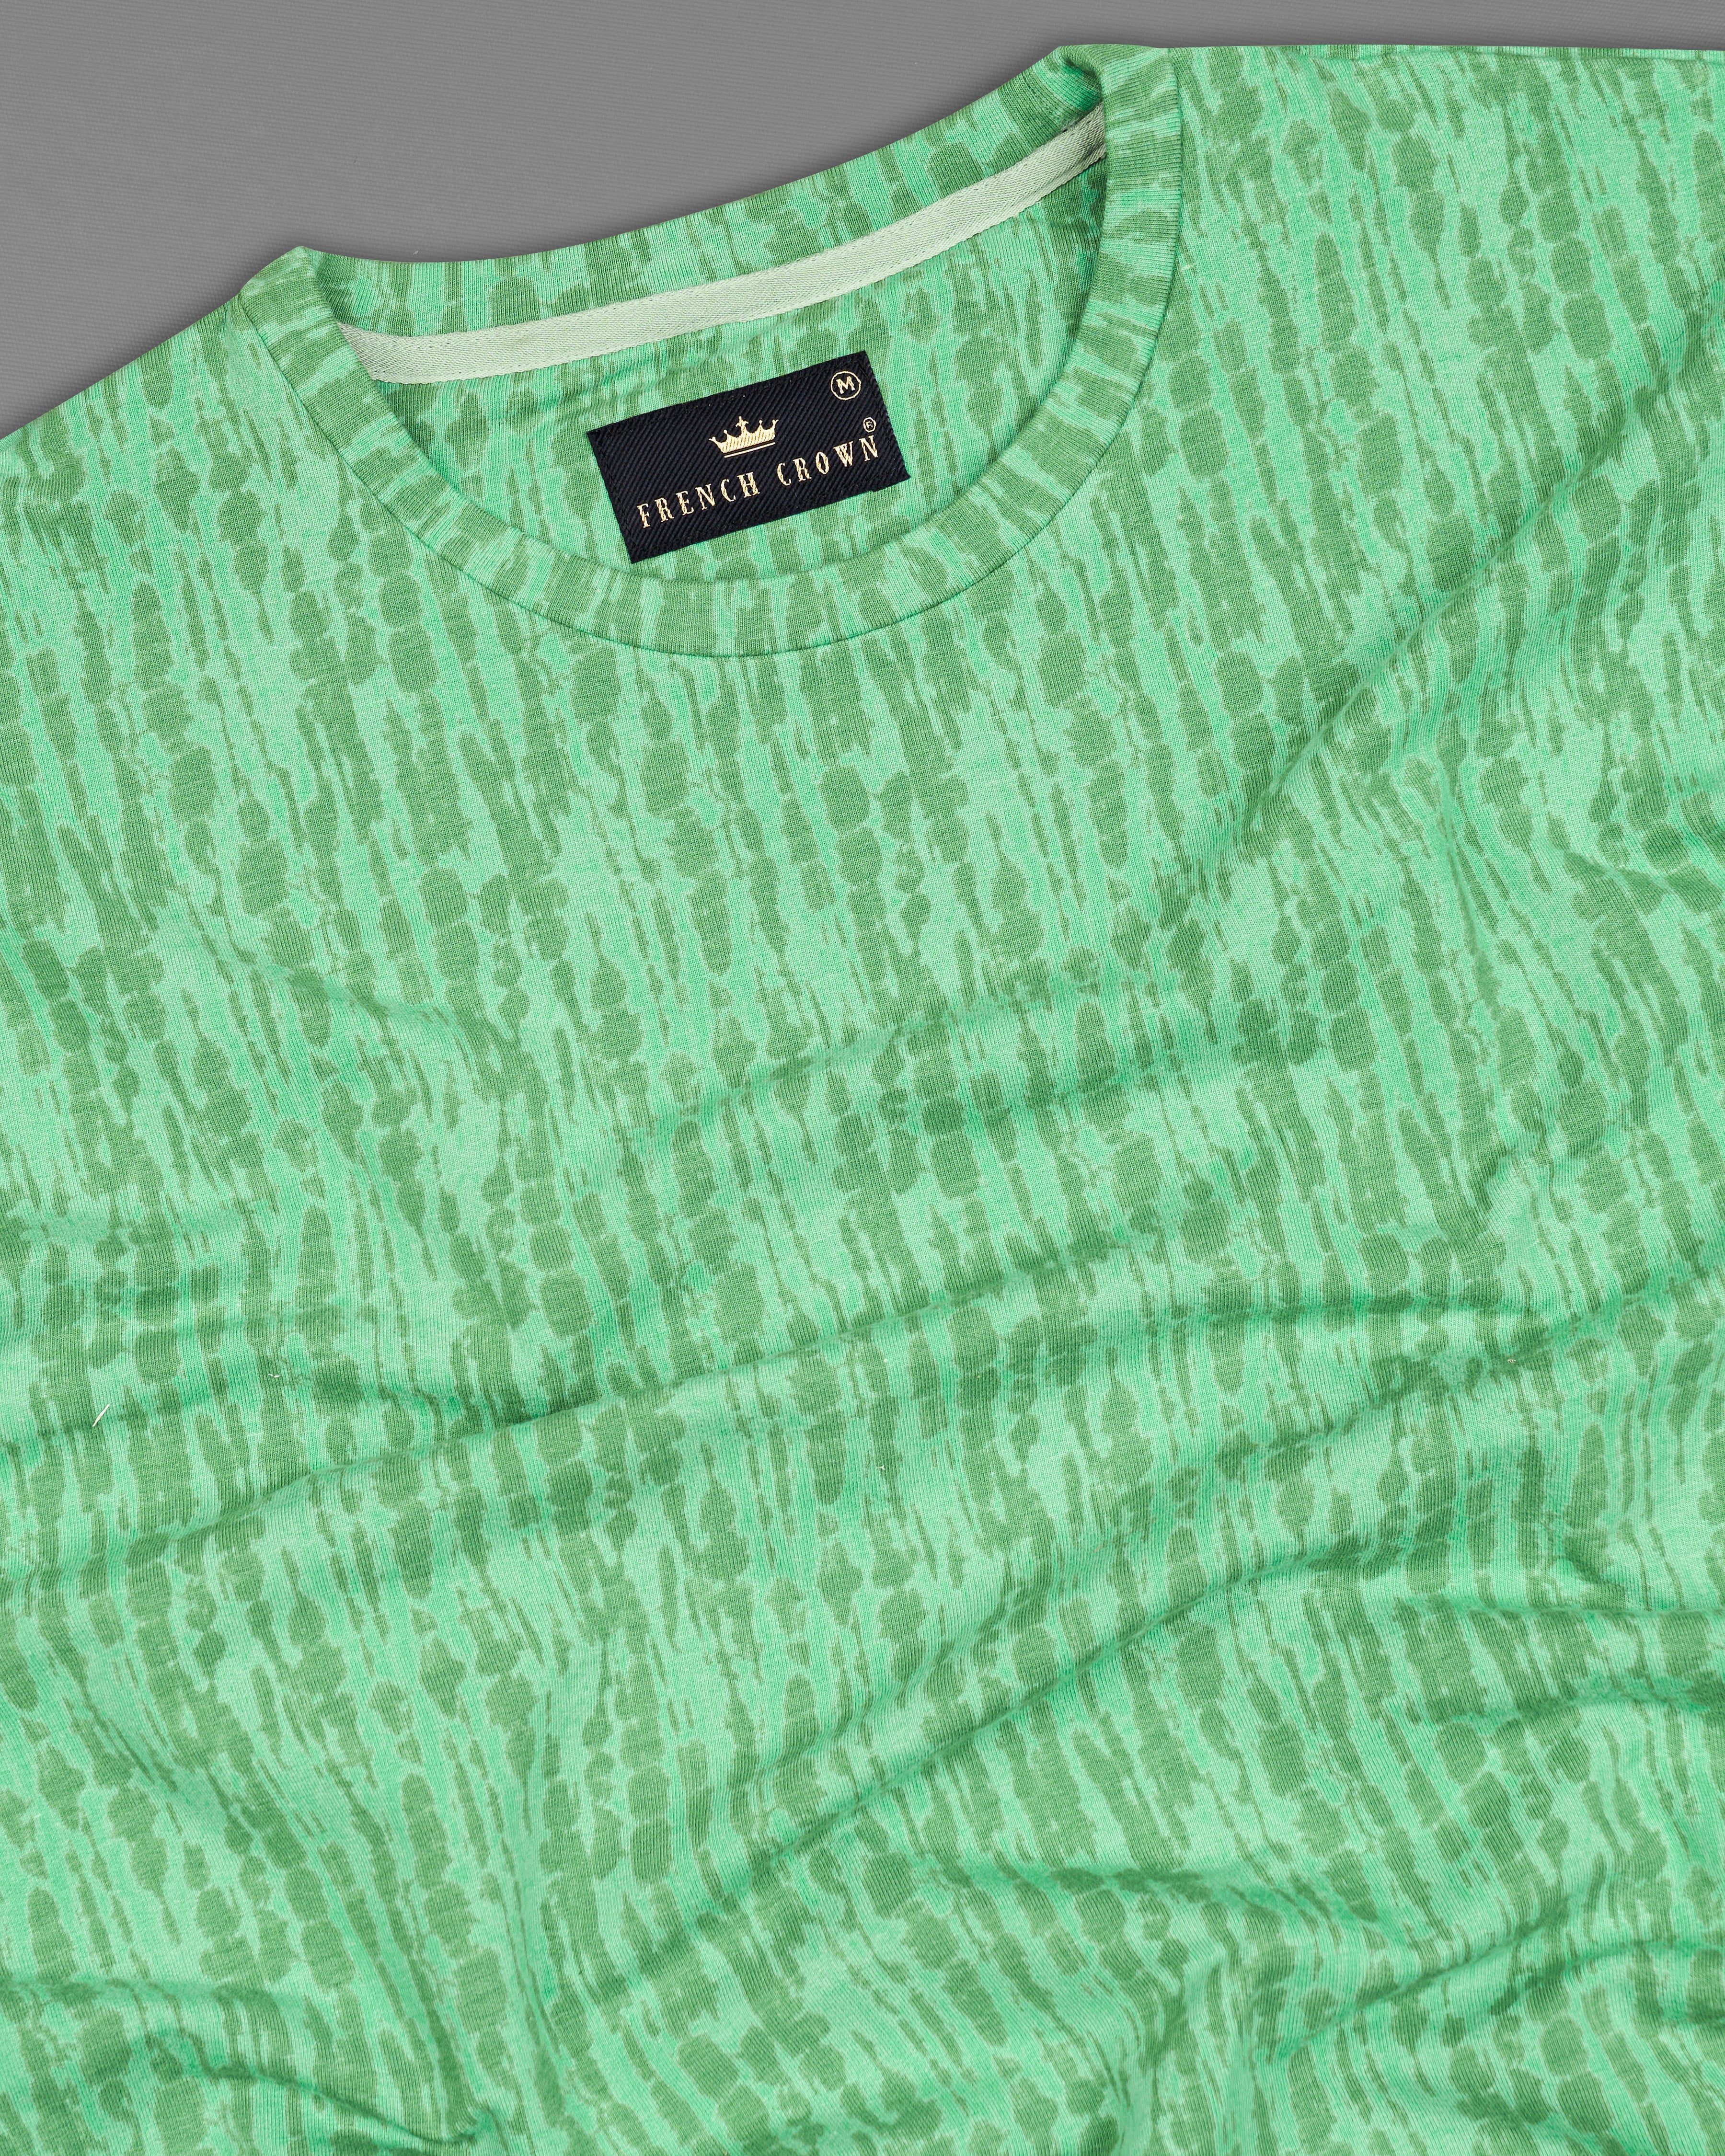 Aqua Forest Green Super Soft Premium Organic Cotton Jersey T-shirt TS829-S, TS829-M, TS829-L, TS829-XL, TS829-XXL